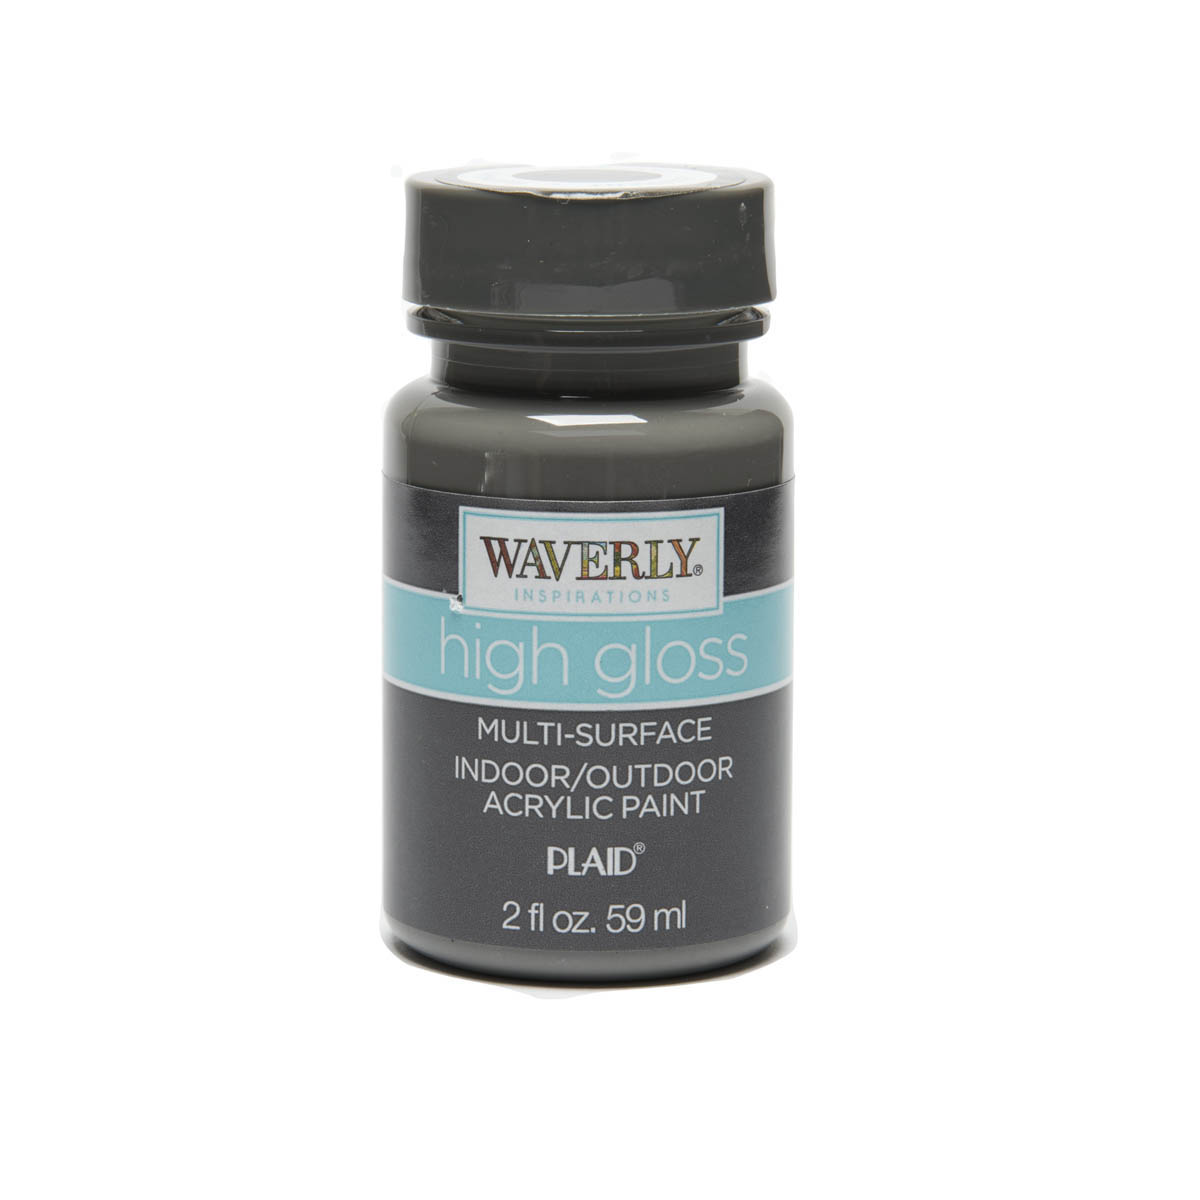 Waverly ® Inspirations High Gloss Multi-Surface Acrylic Paint - Elephant, 2 oz. - 60694E